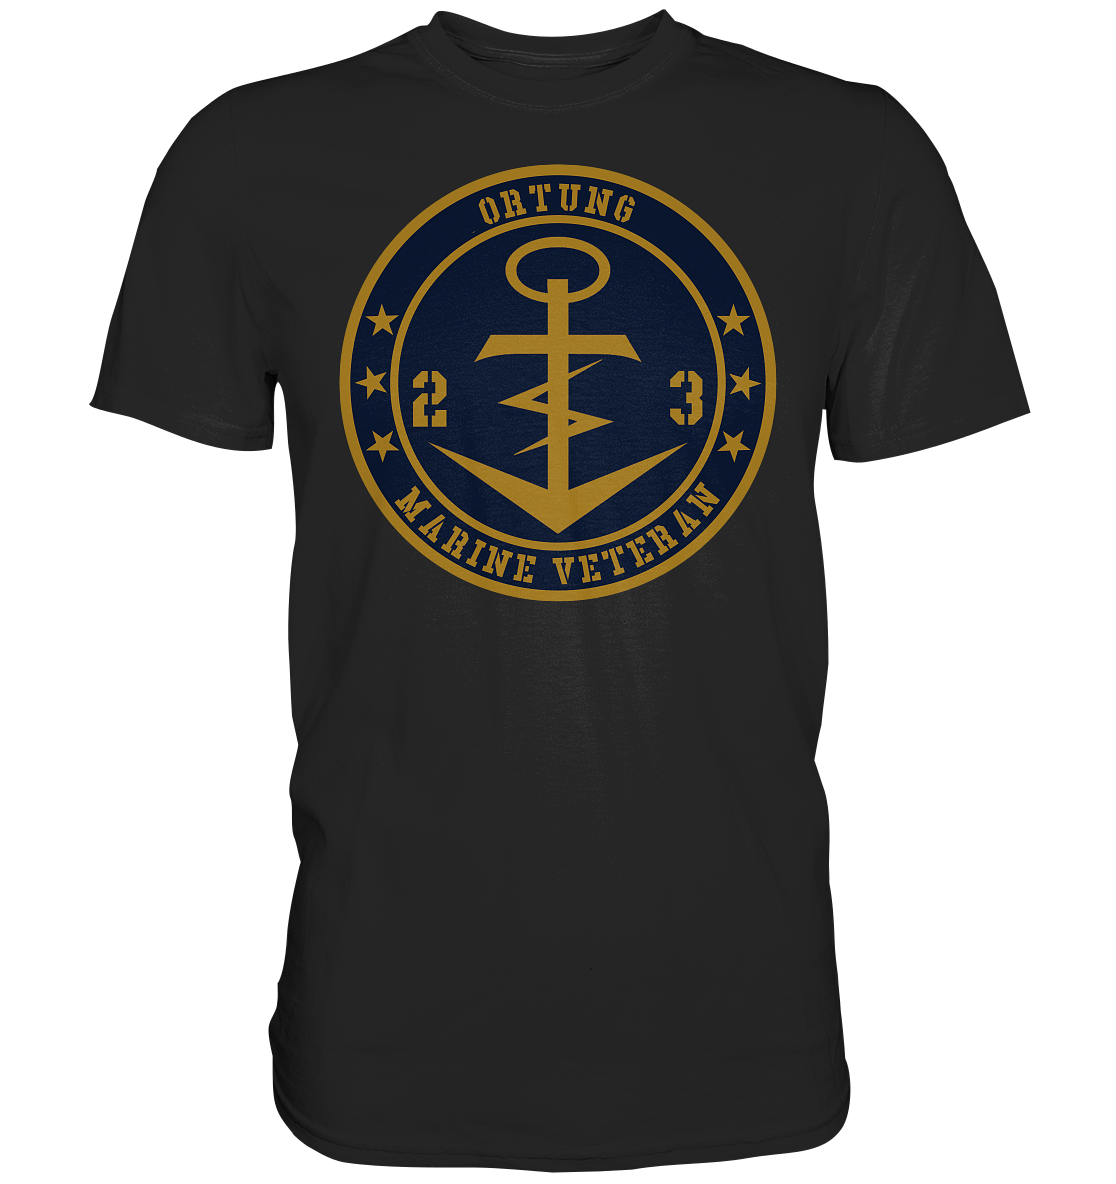 Marine Veteran 23er ORTUNG - Premium Shirt